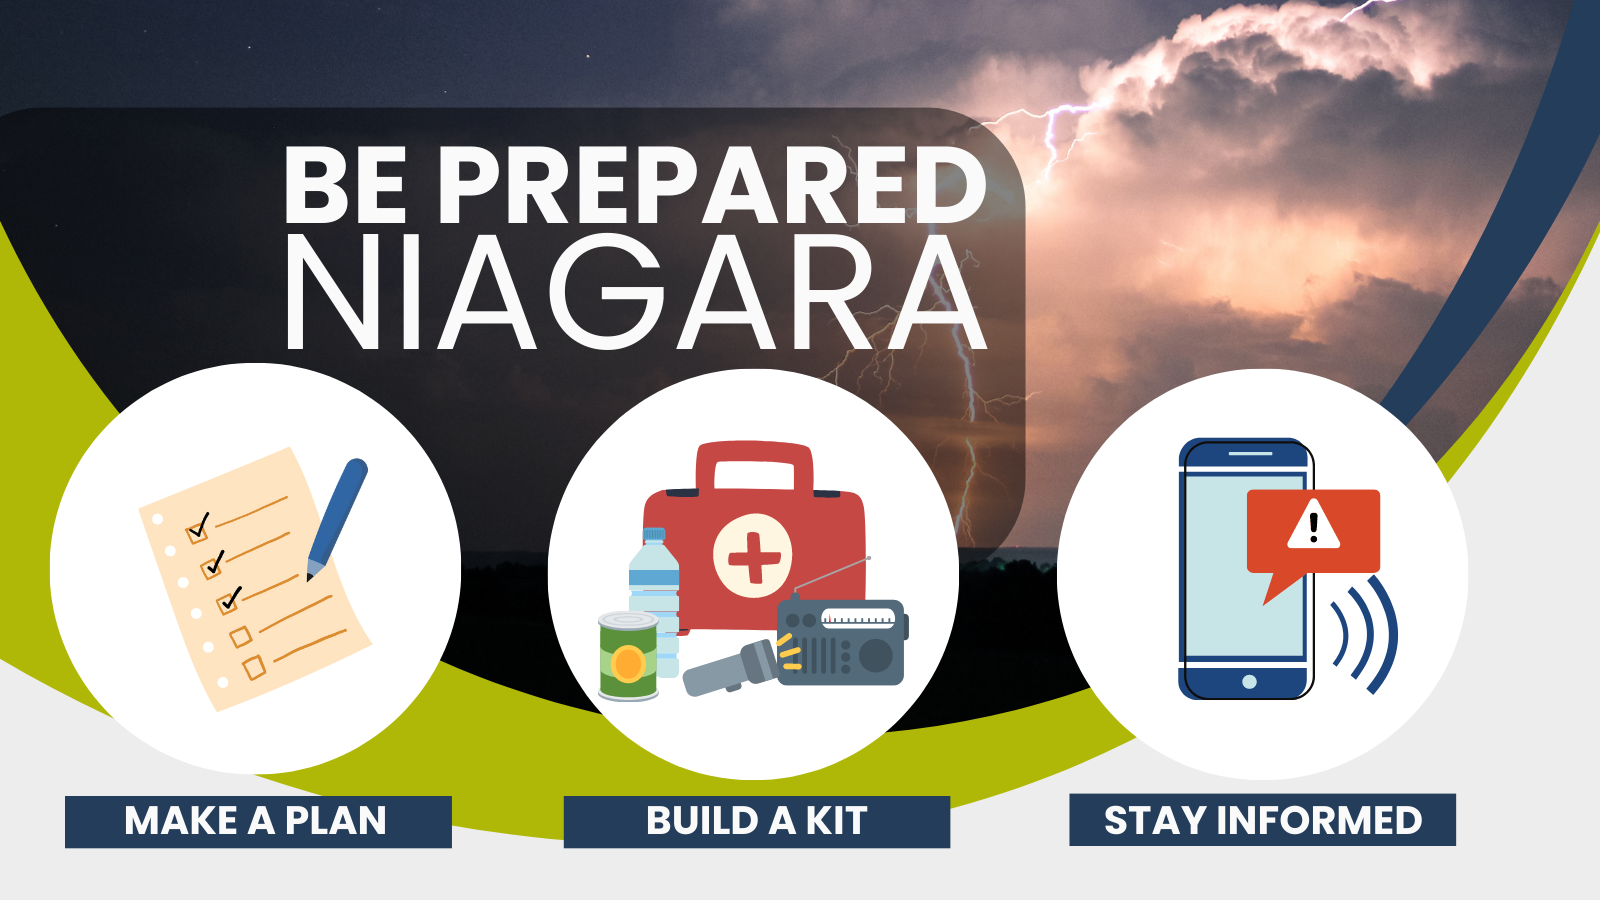 Be prepared niagara